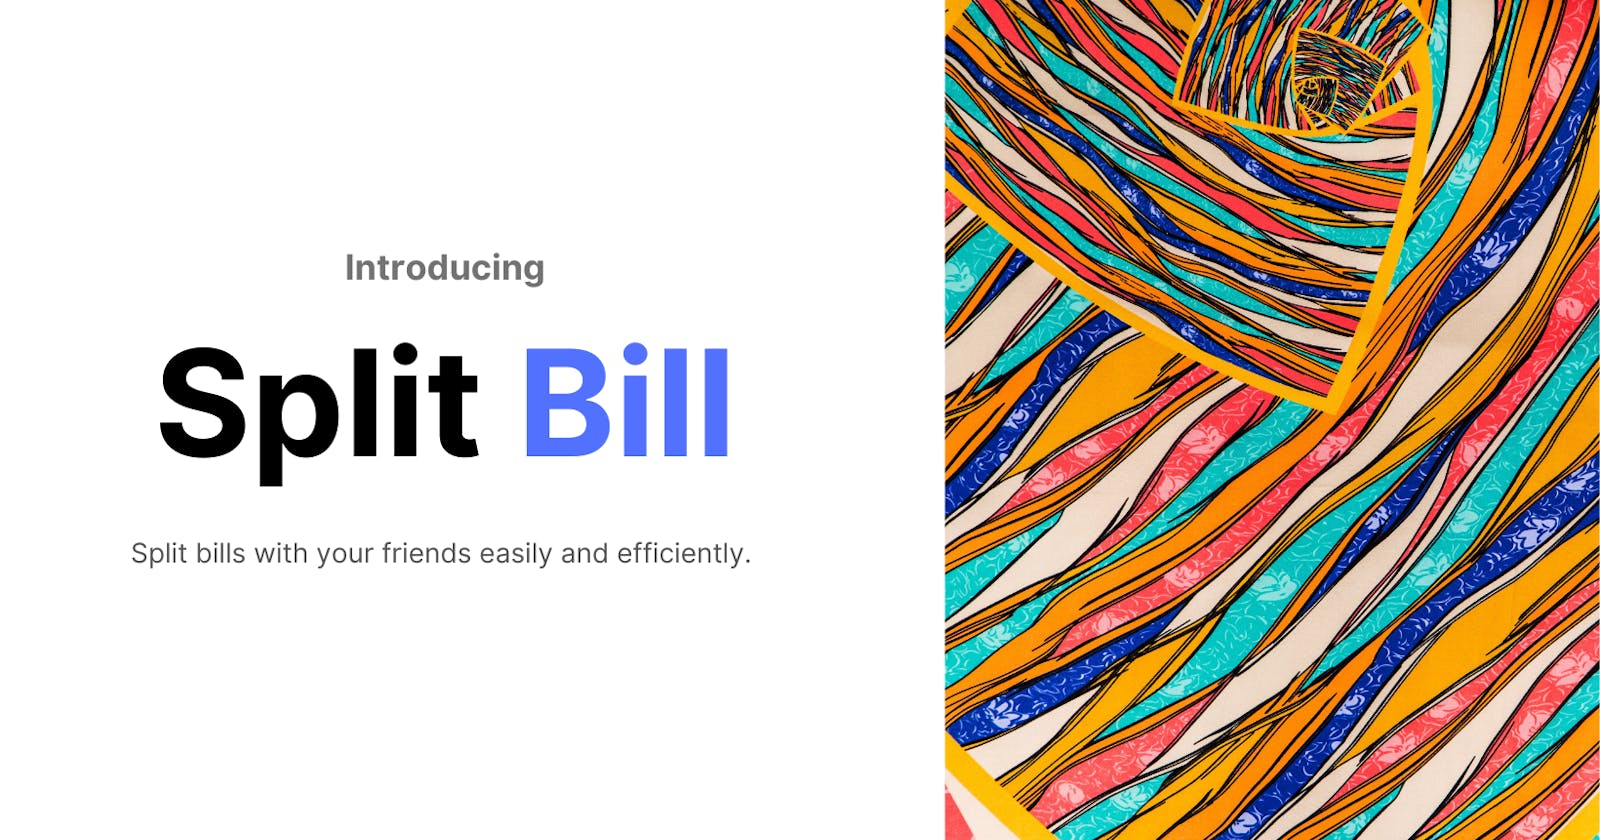 Introducing SplitBill: Split bills easily with friends